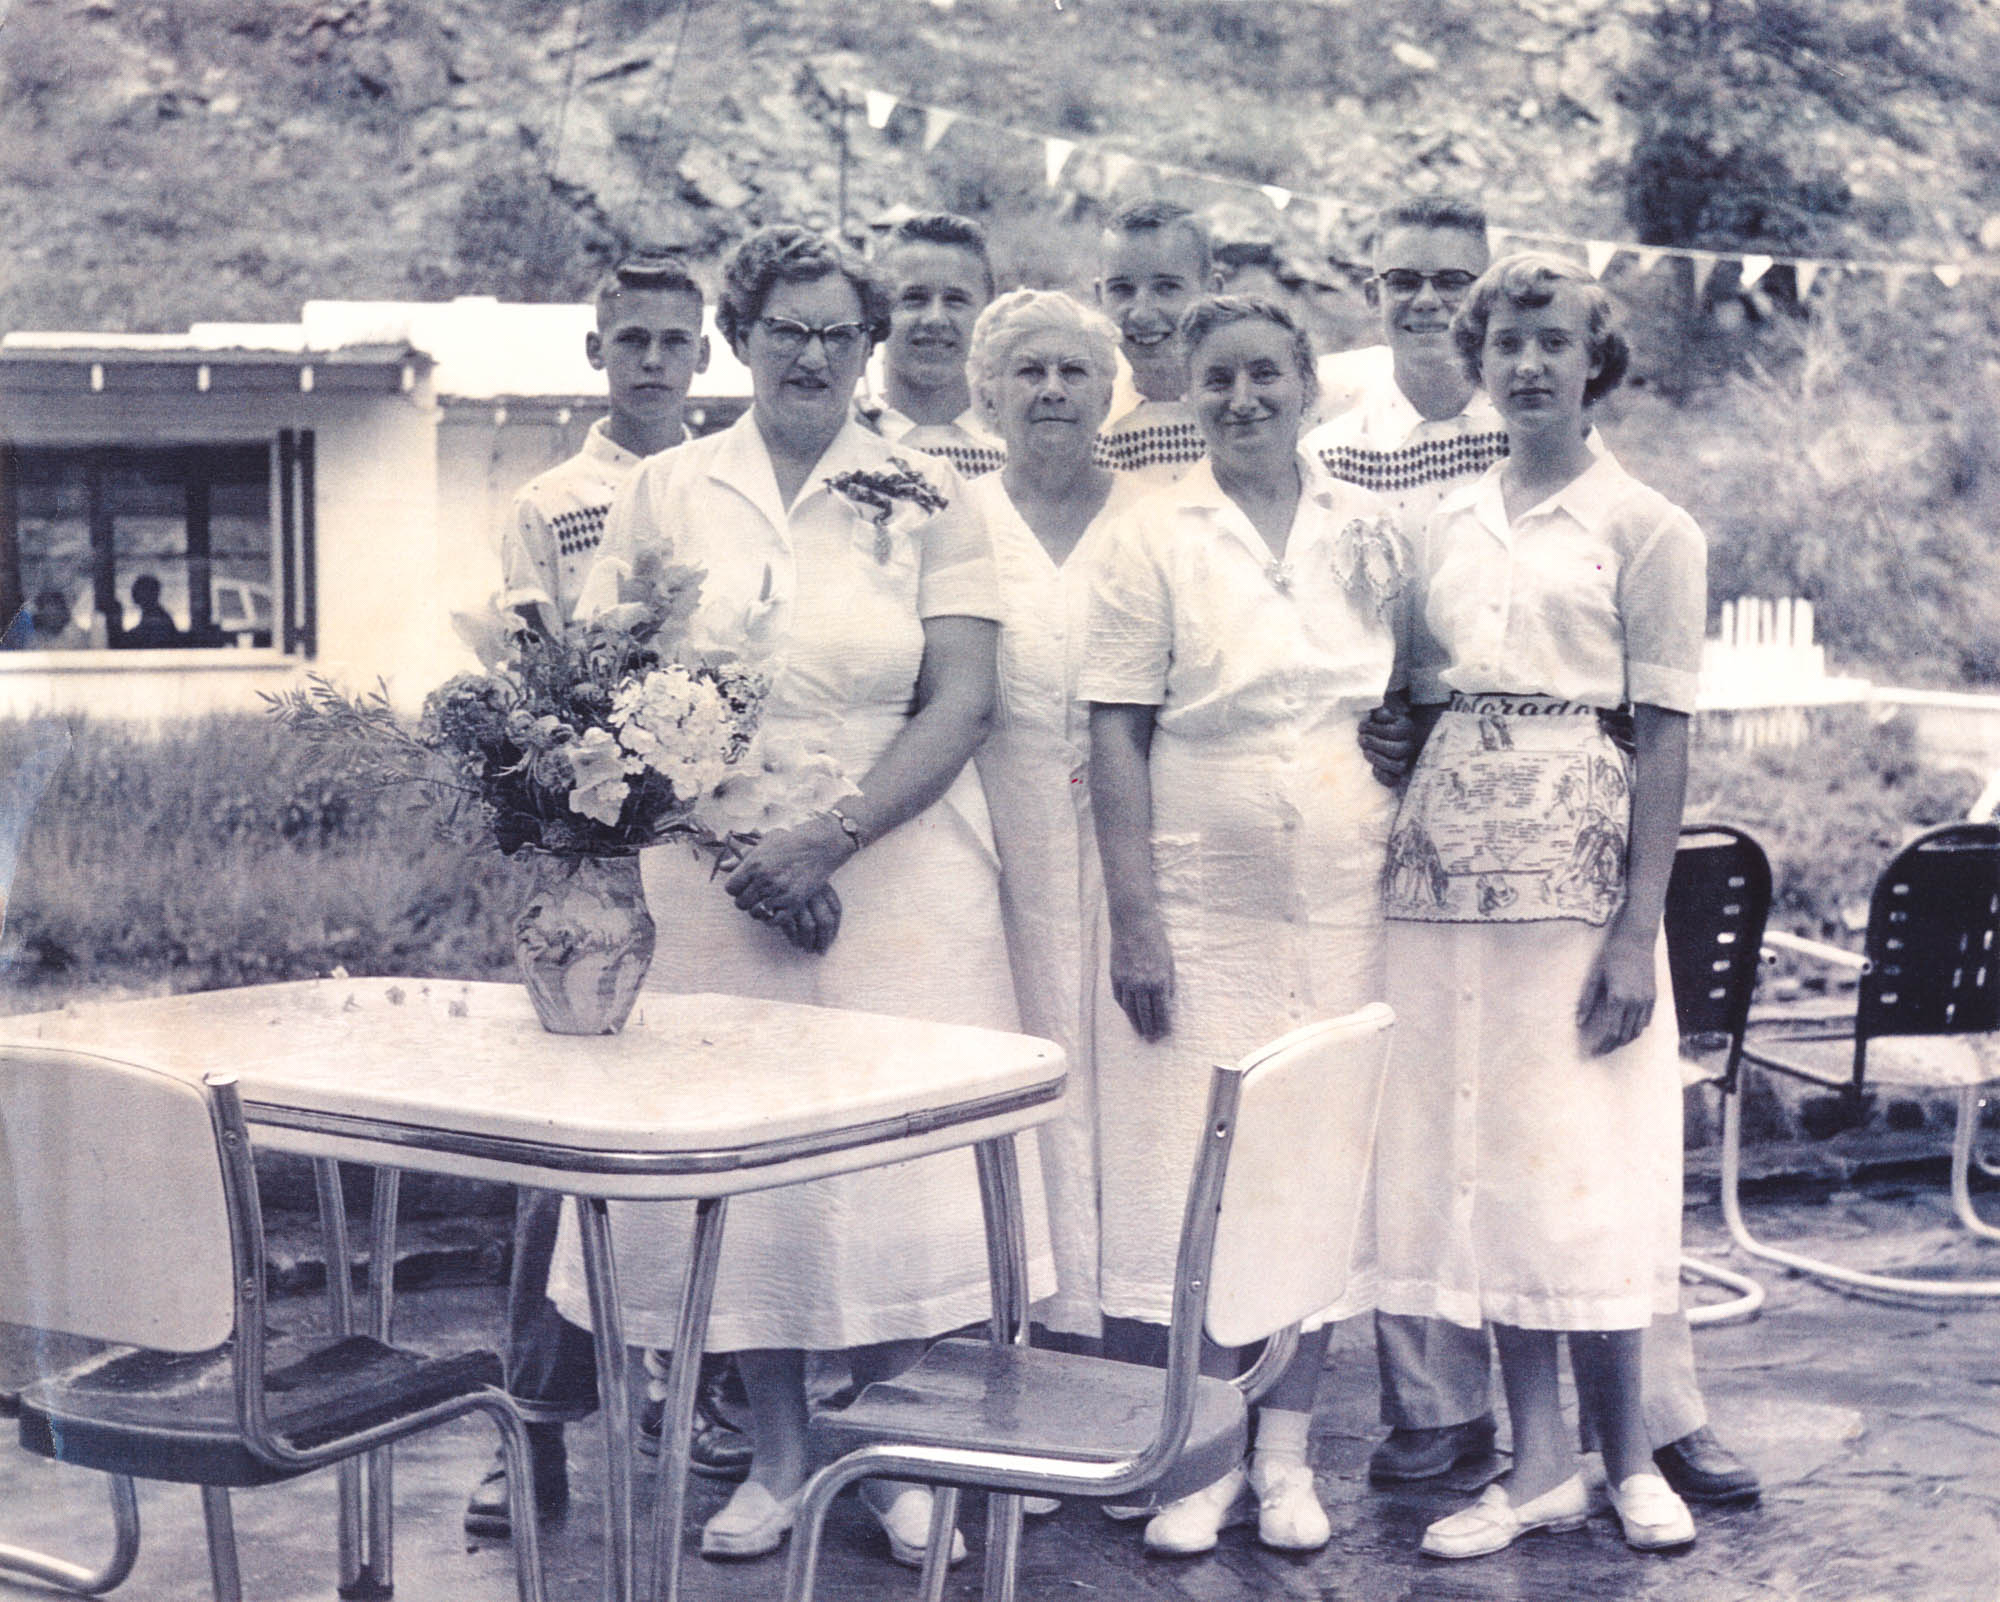 Idlewild Lodge - idlewildlodge.github.io - Circa 1955 - Staff at the Appleby Cafe